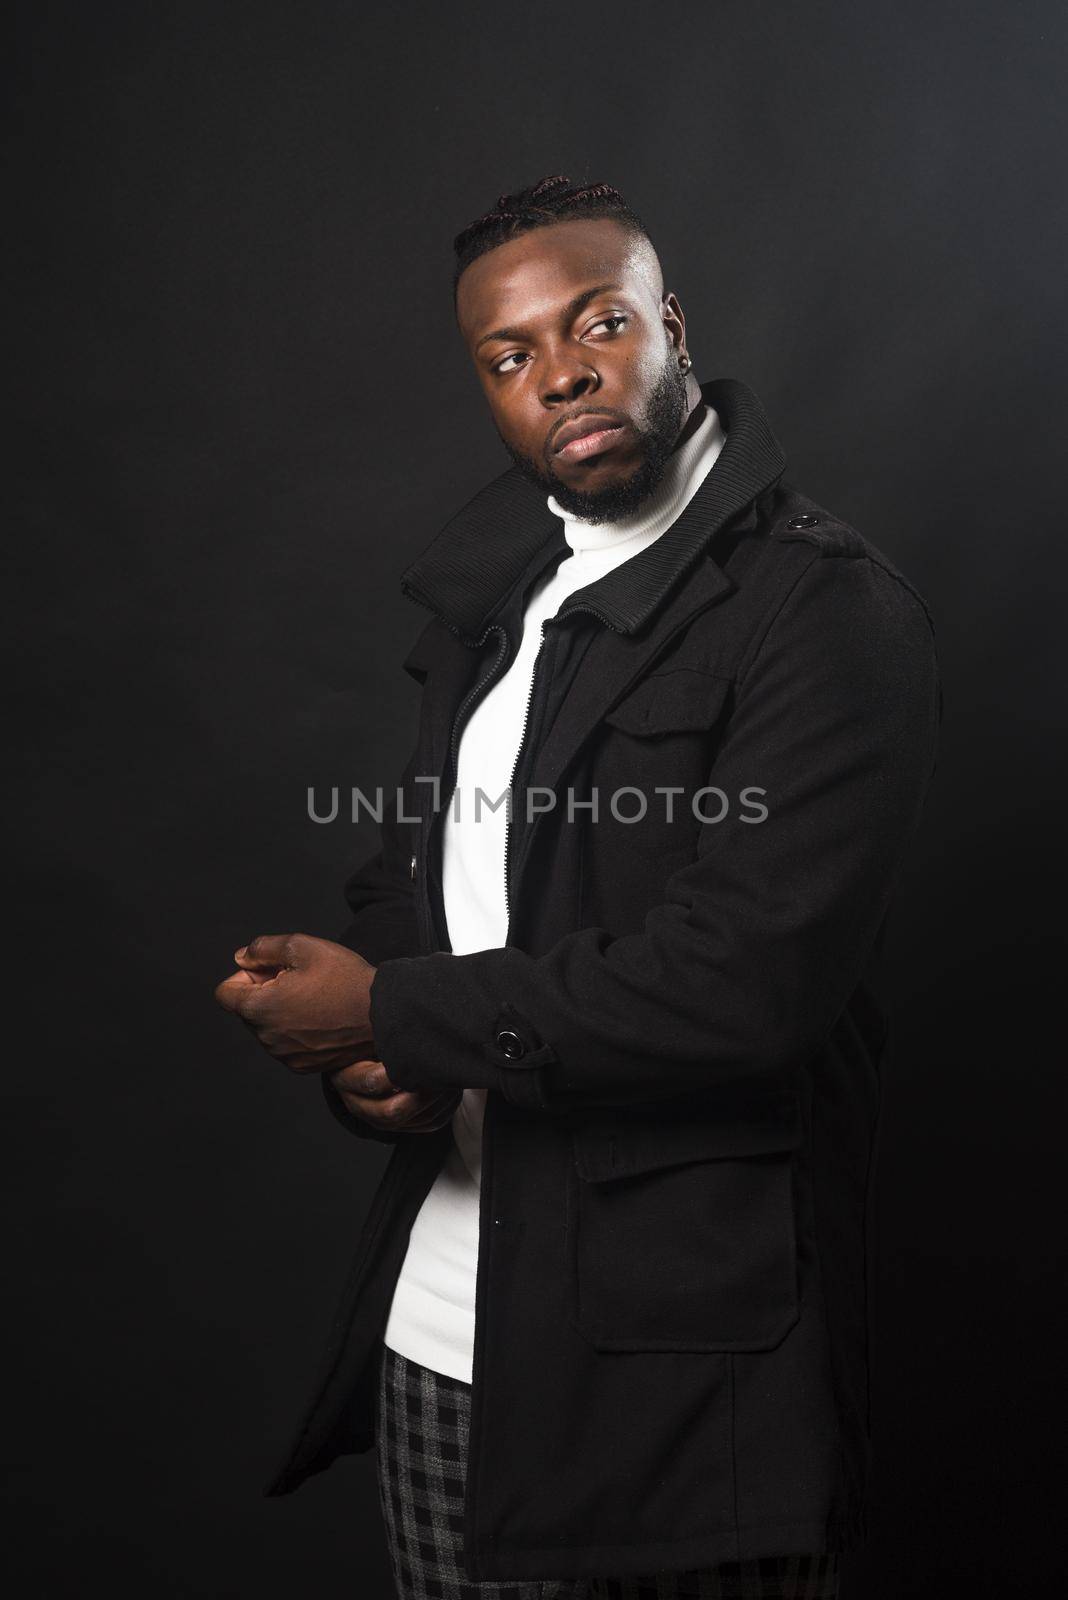 Handsome black man posing, putting on his jacket sleeve. Mid shot. Black background.